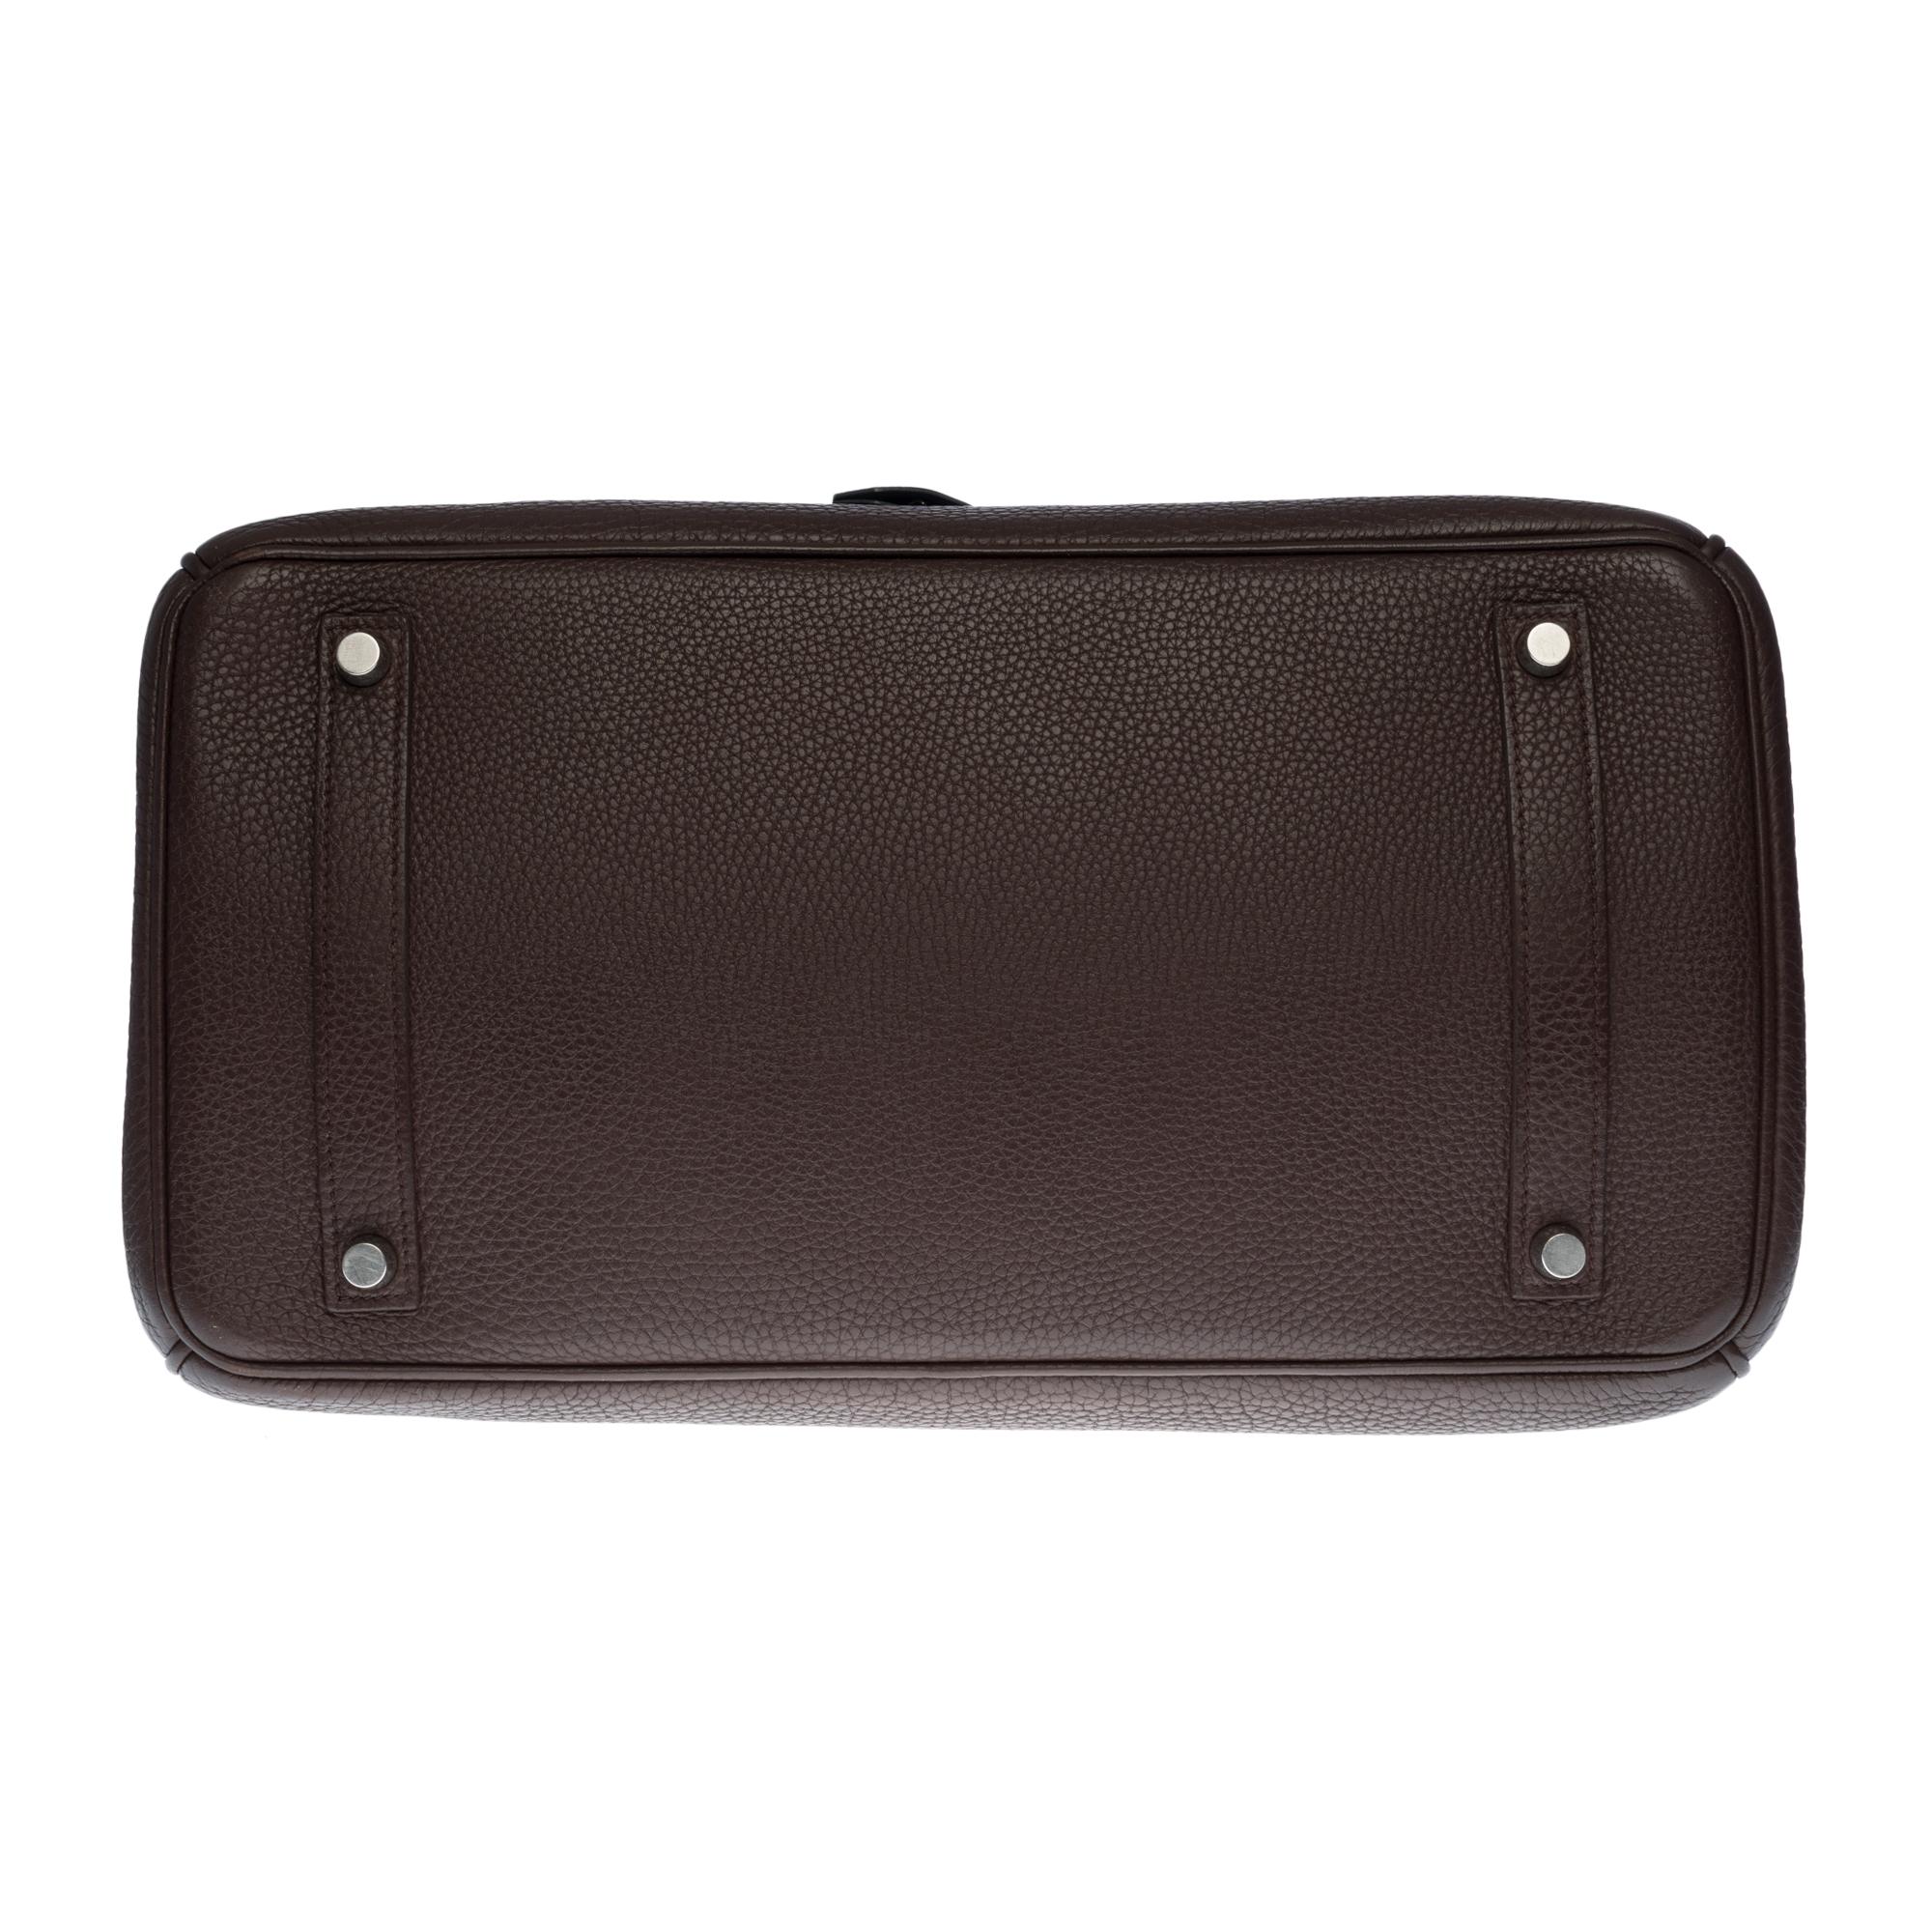 Hermès Birkin 35 handbag in brown Togo leather with silver hardware ! 1